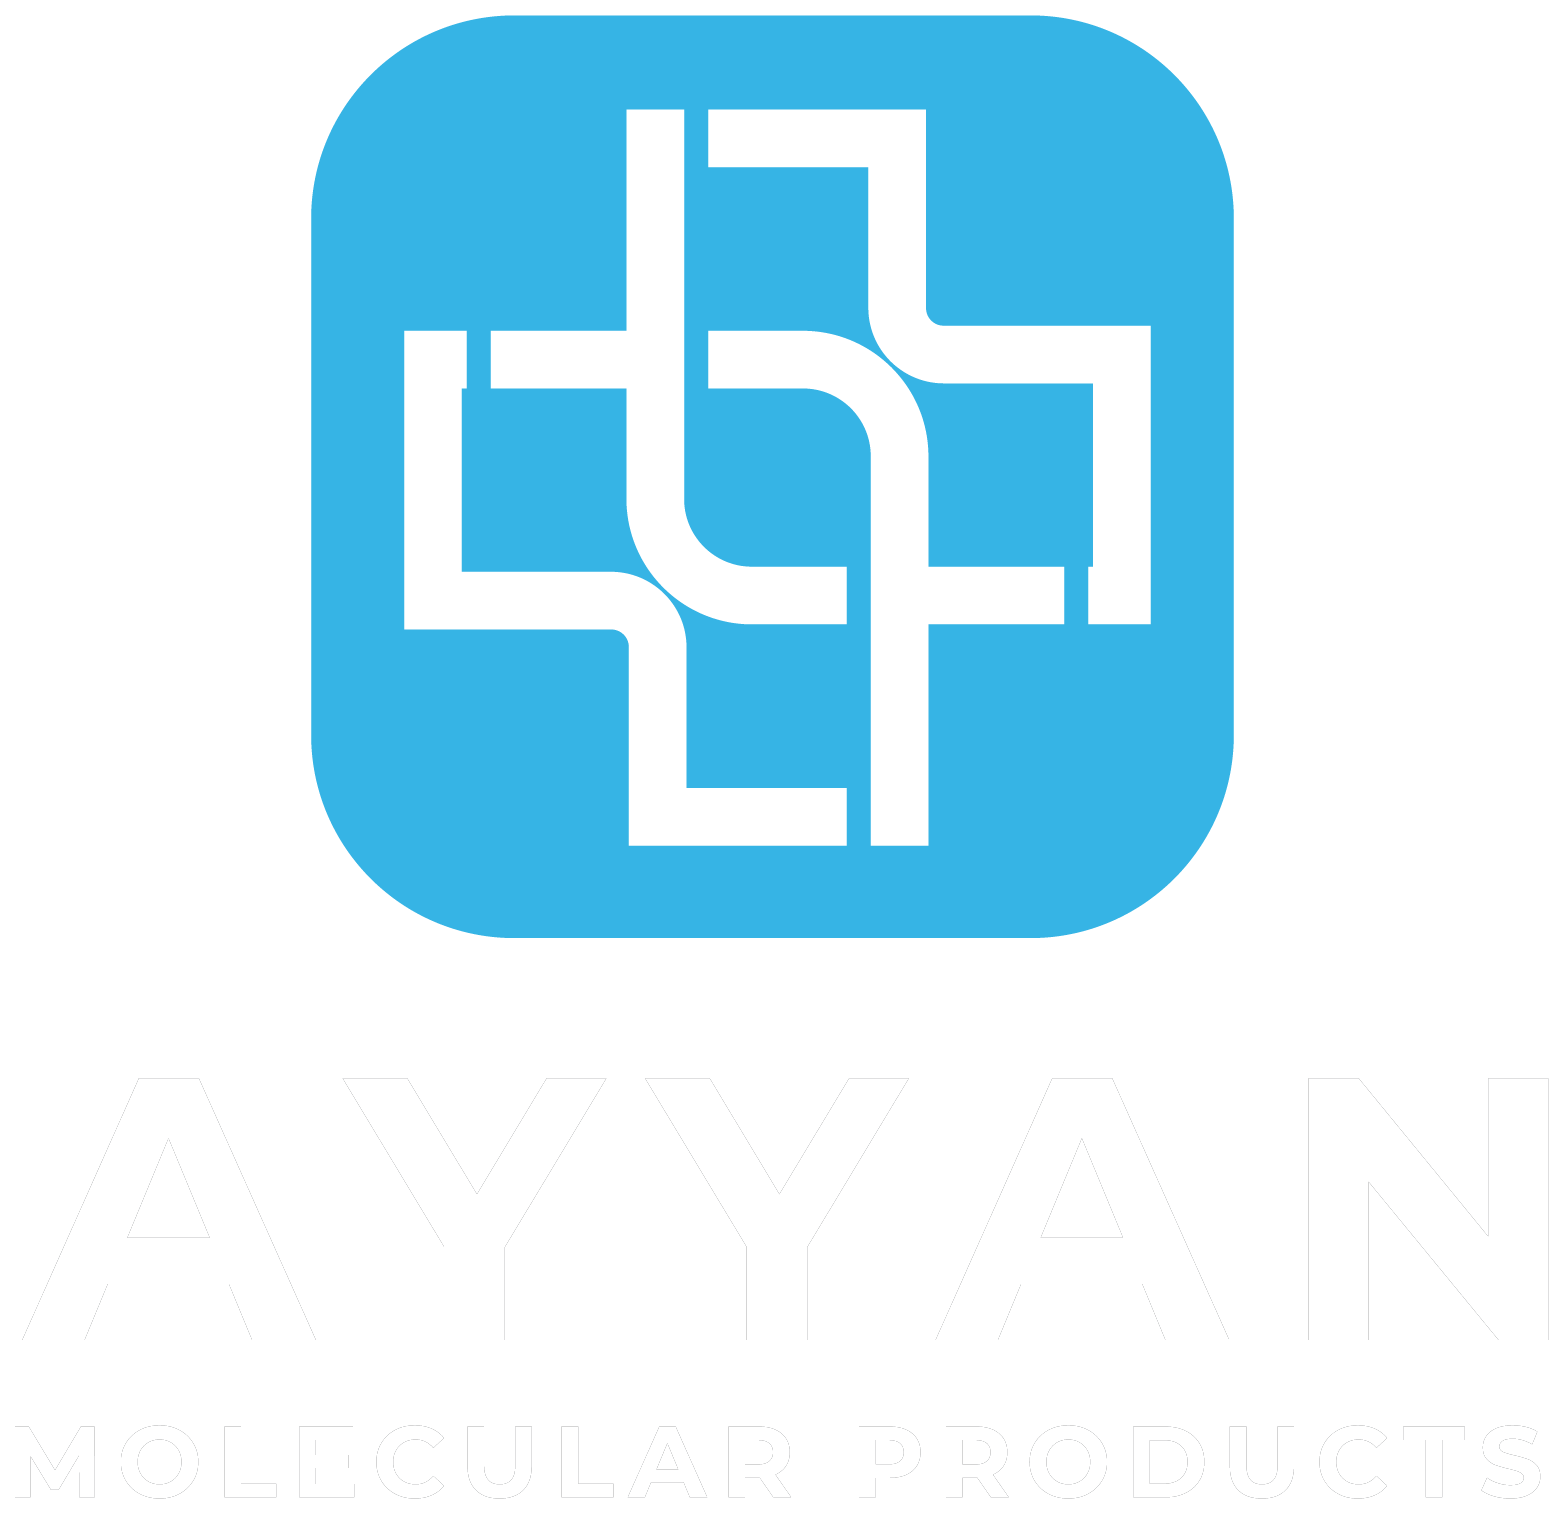 AYYAN MOLECULAR PRODUCTS